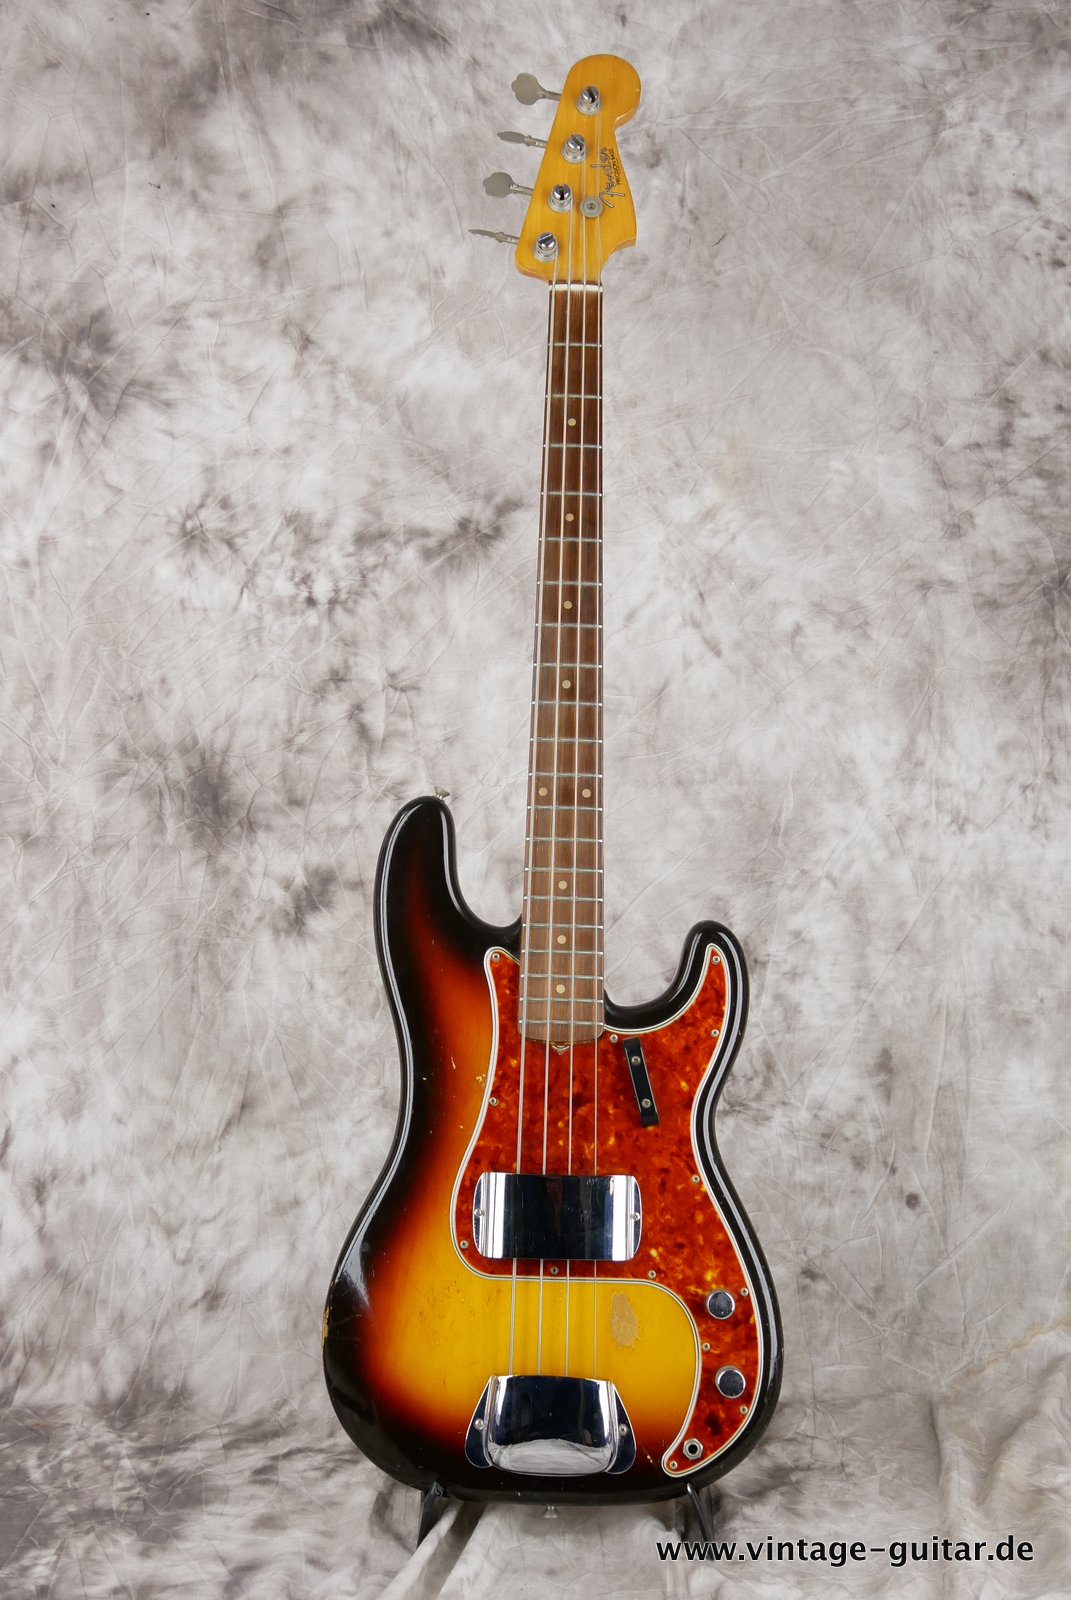 Fender-Precision-Bass-1961-Slapboard-John-Entwistle-001.JPG